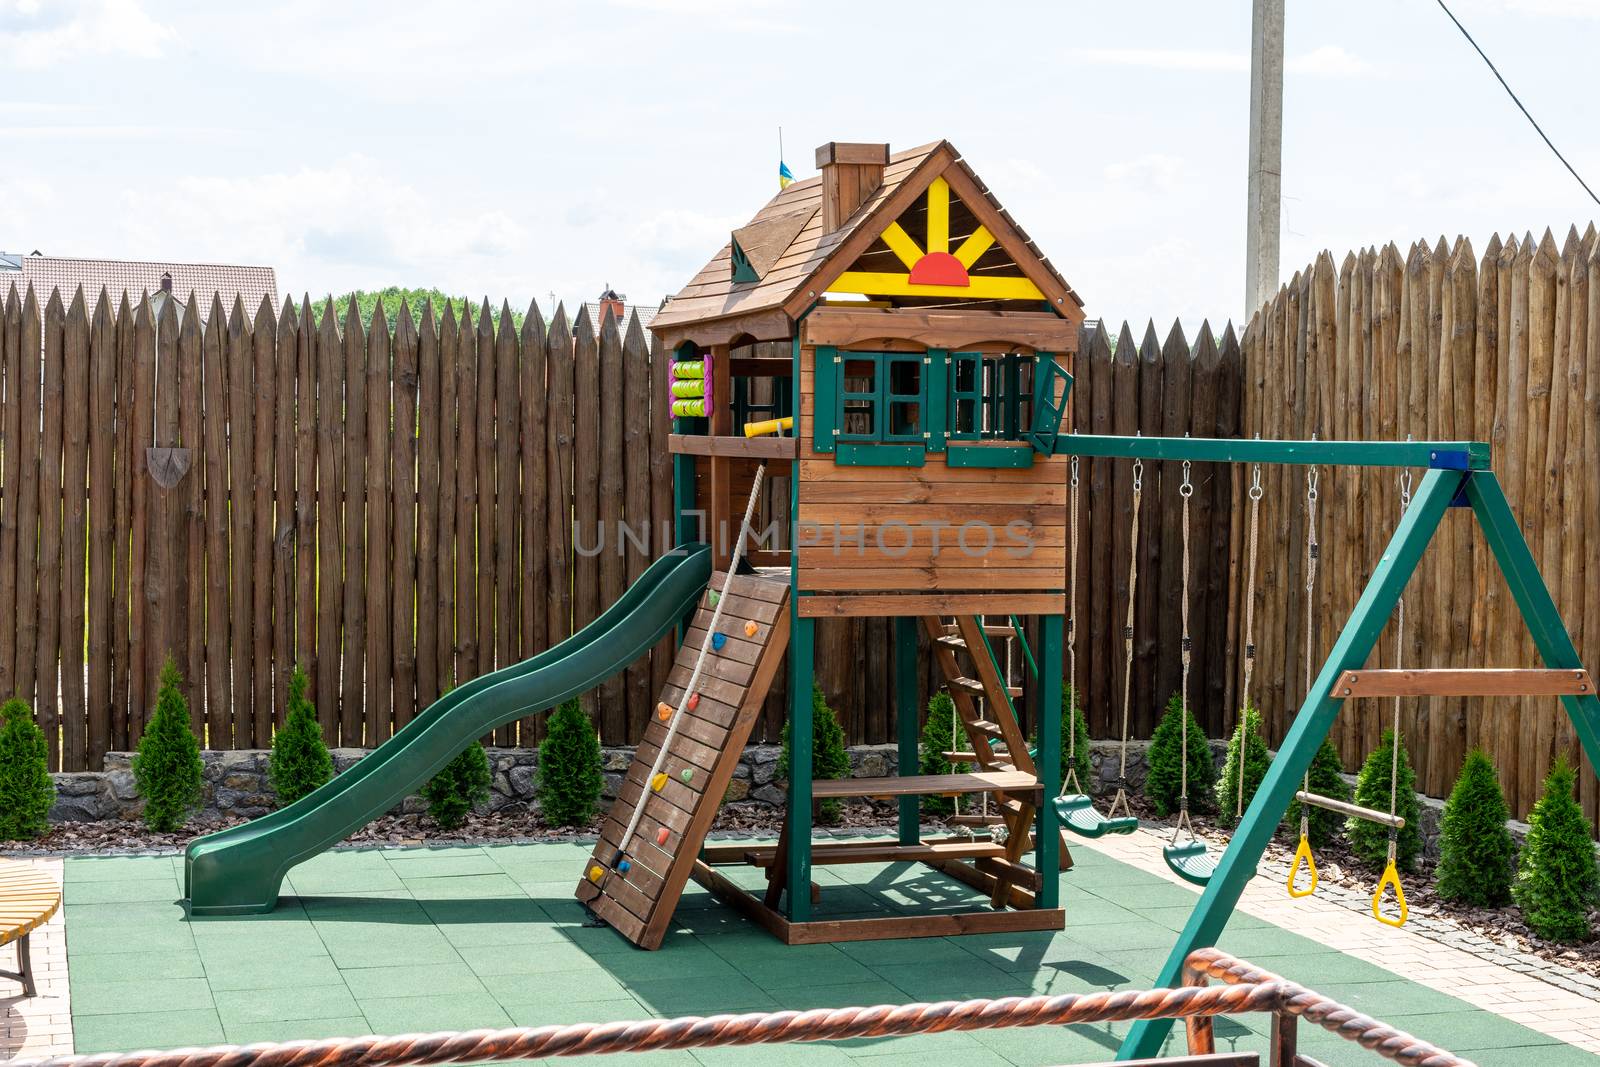 A small playground. Children's wooden house. Children's swing